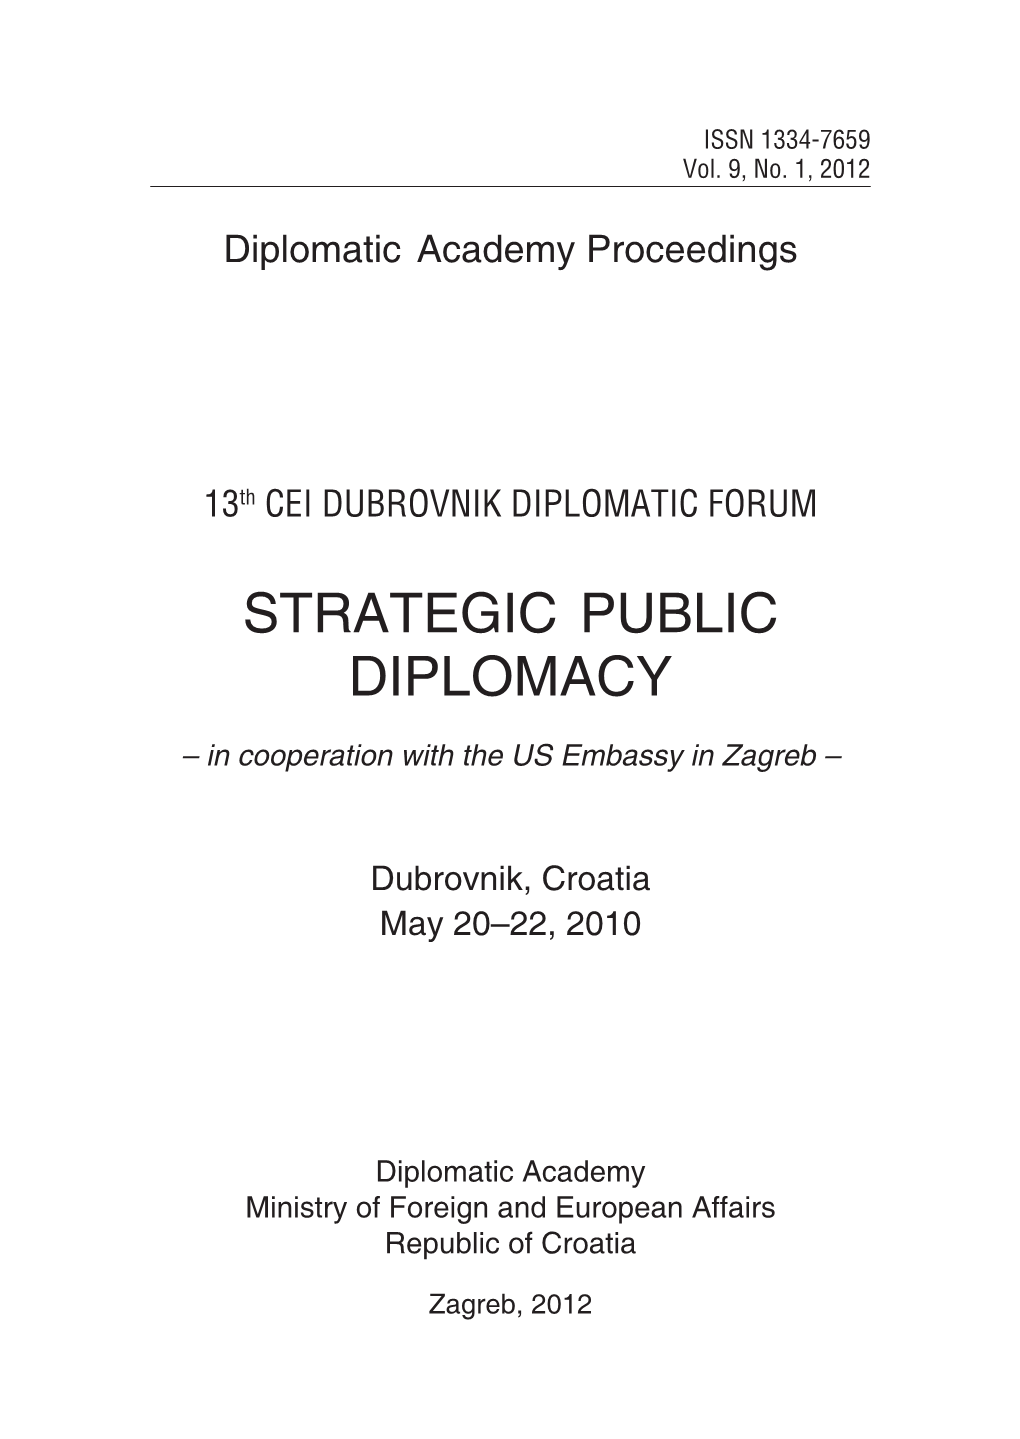 13Th CEI Dubrovnik Diplomatic Forum: Strategic Public Diplomacy